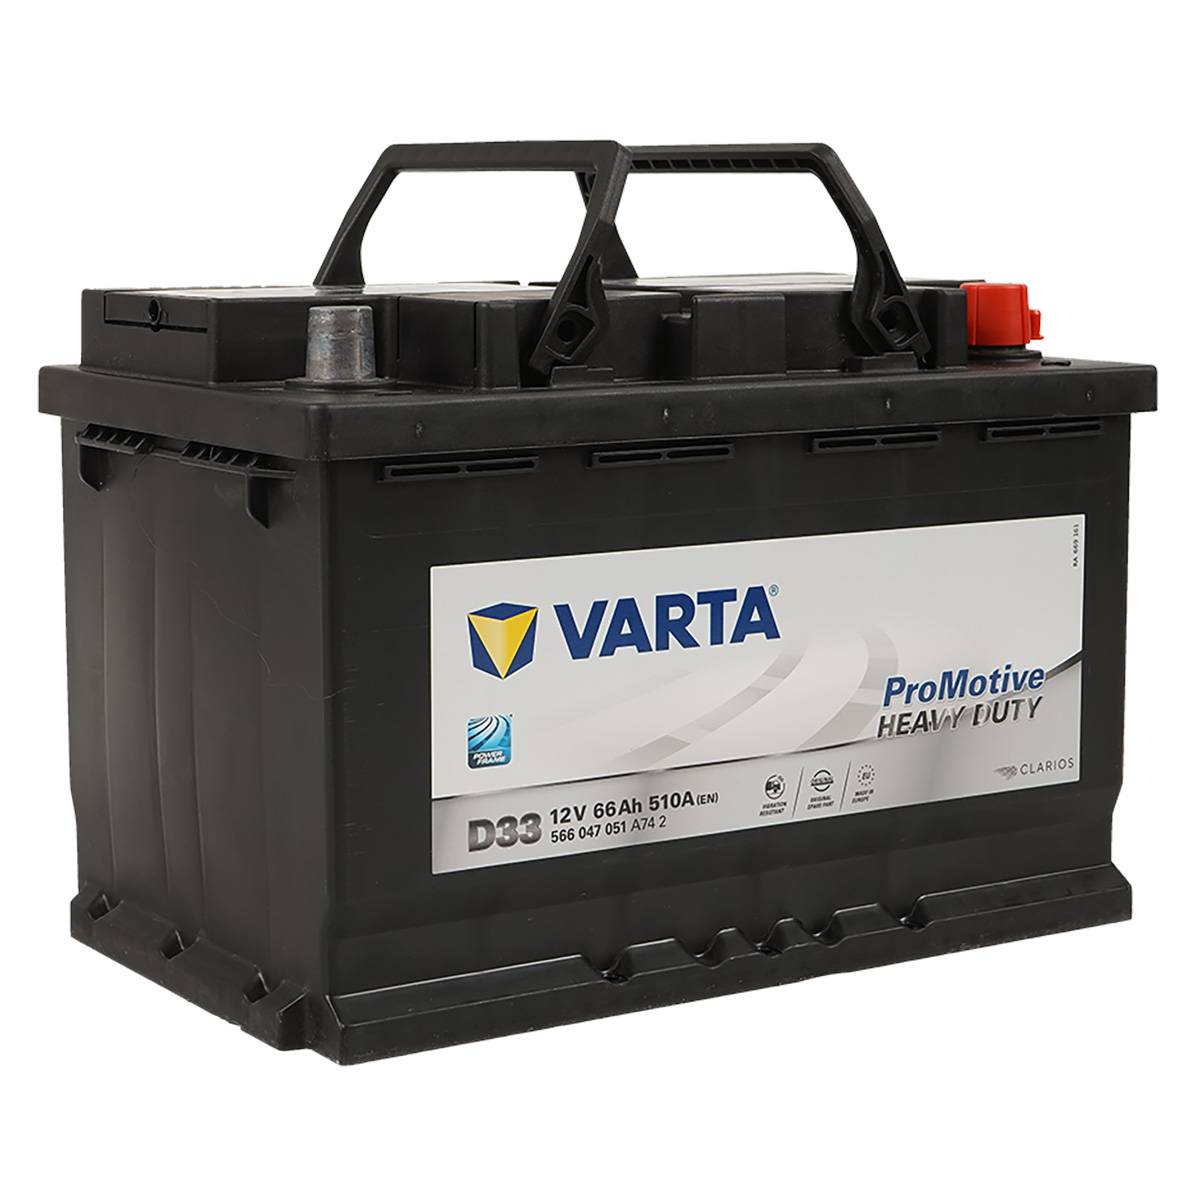 12v Varta car battery, in Winchester, Hampshire